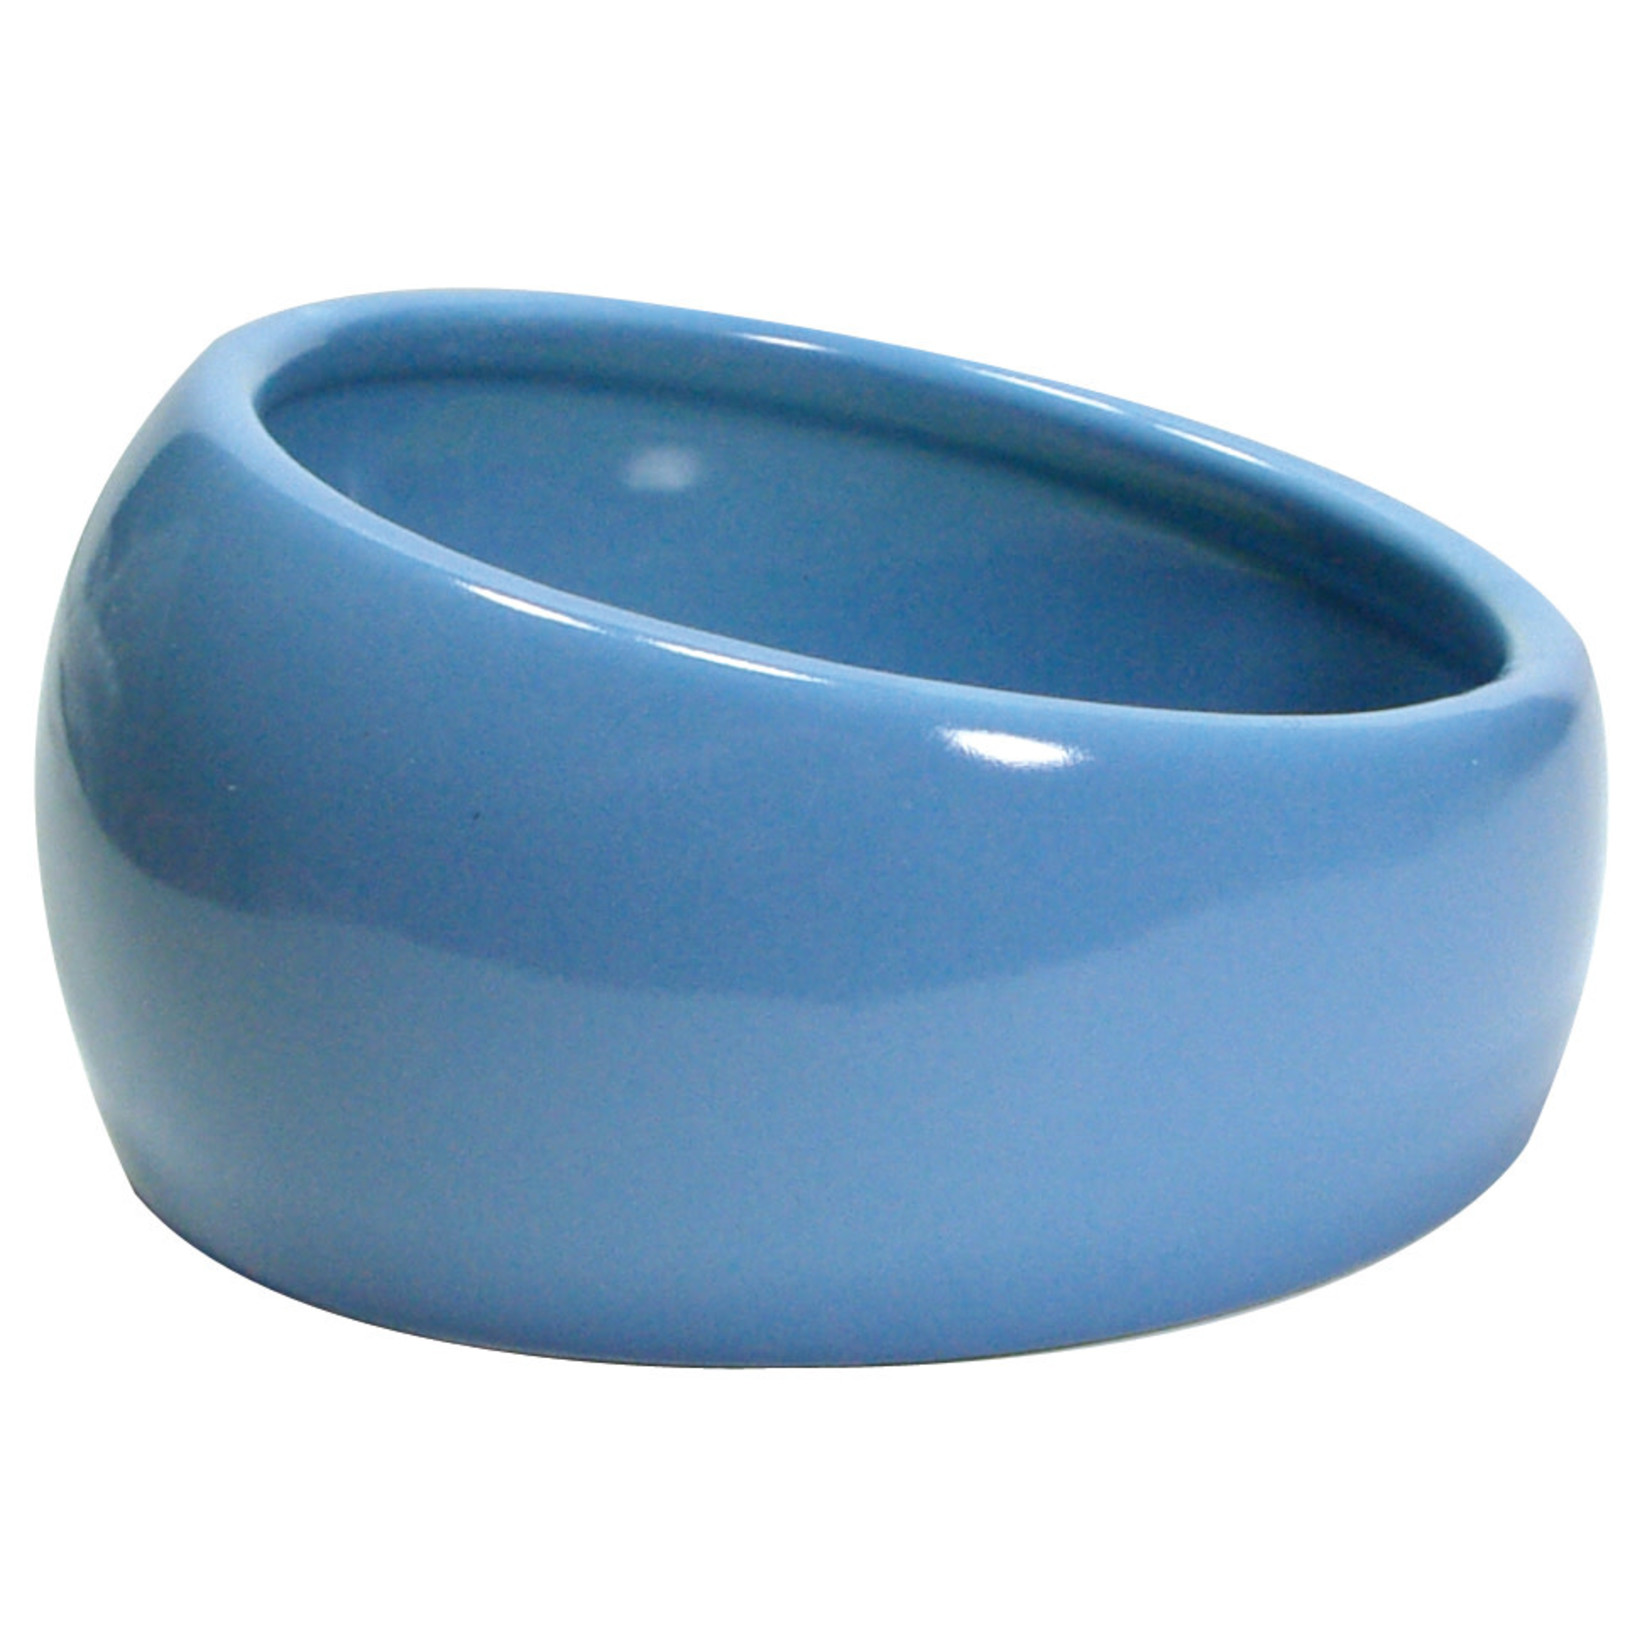 LIVING WORLD Living World Ergonomic Dish - Small - 120 mL (4.22 oz) - Blue/Ceramic